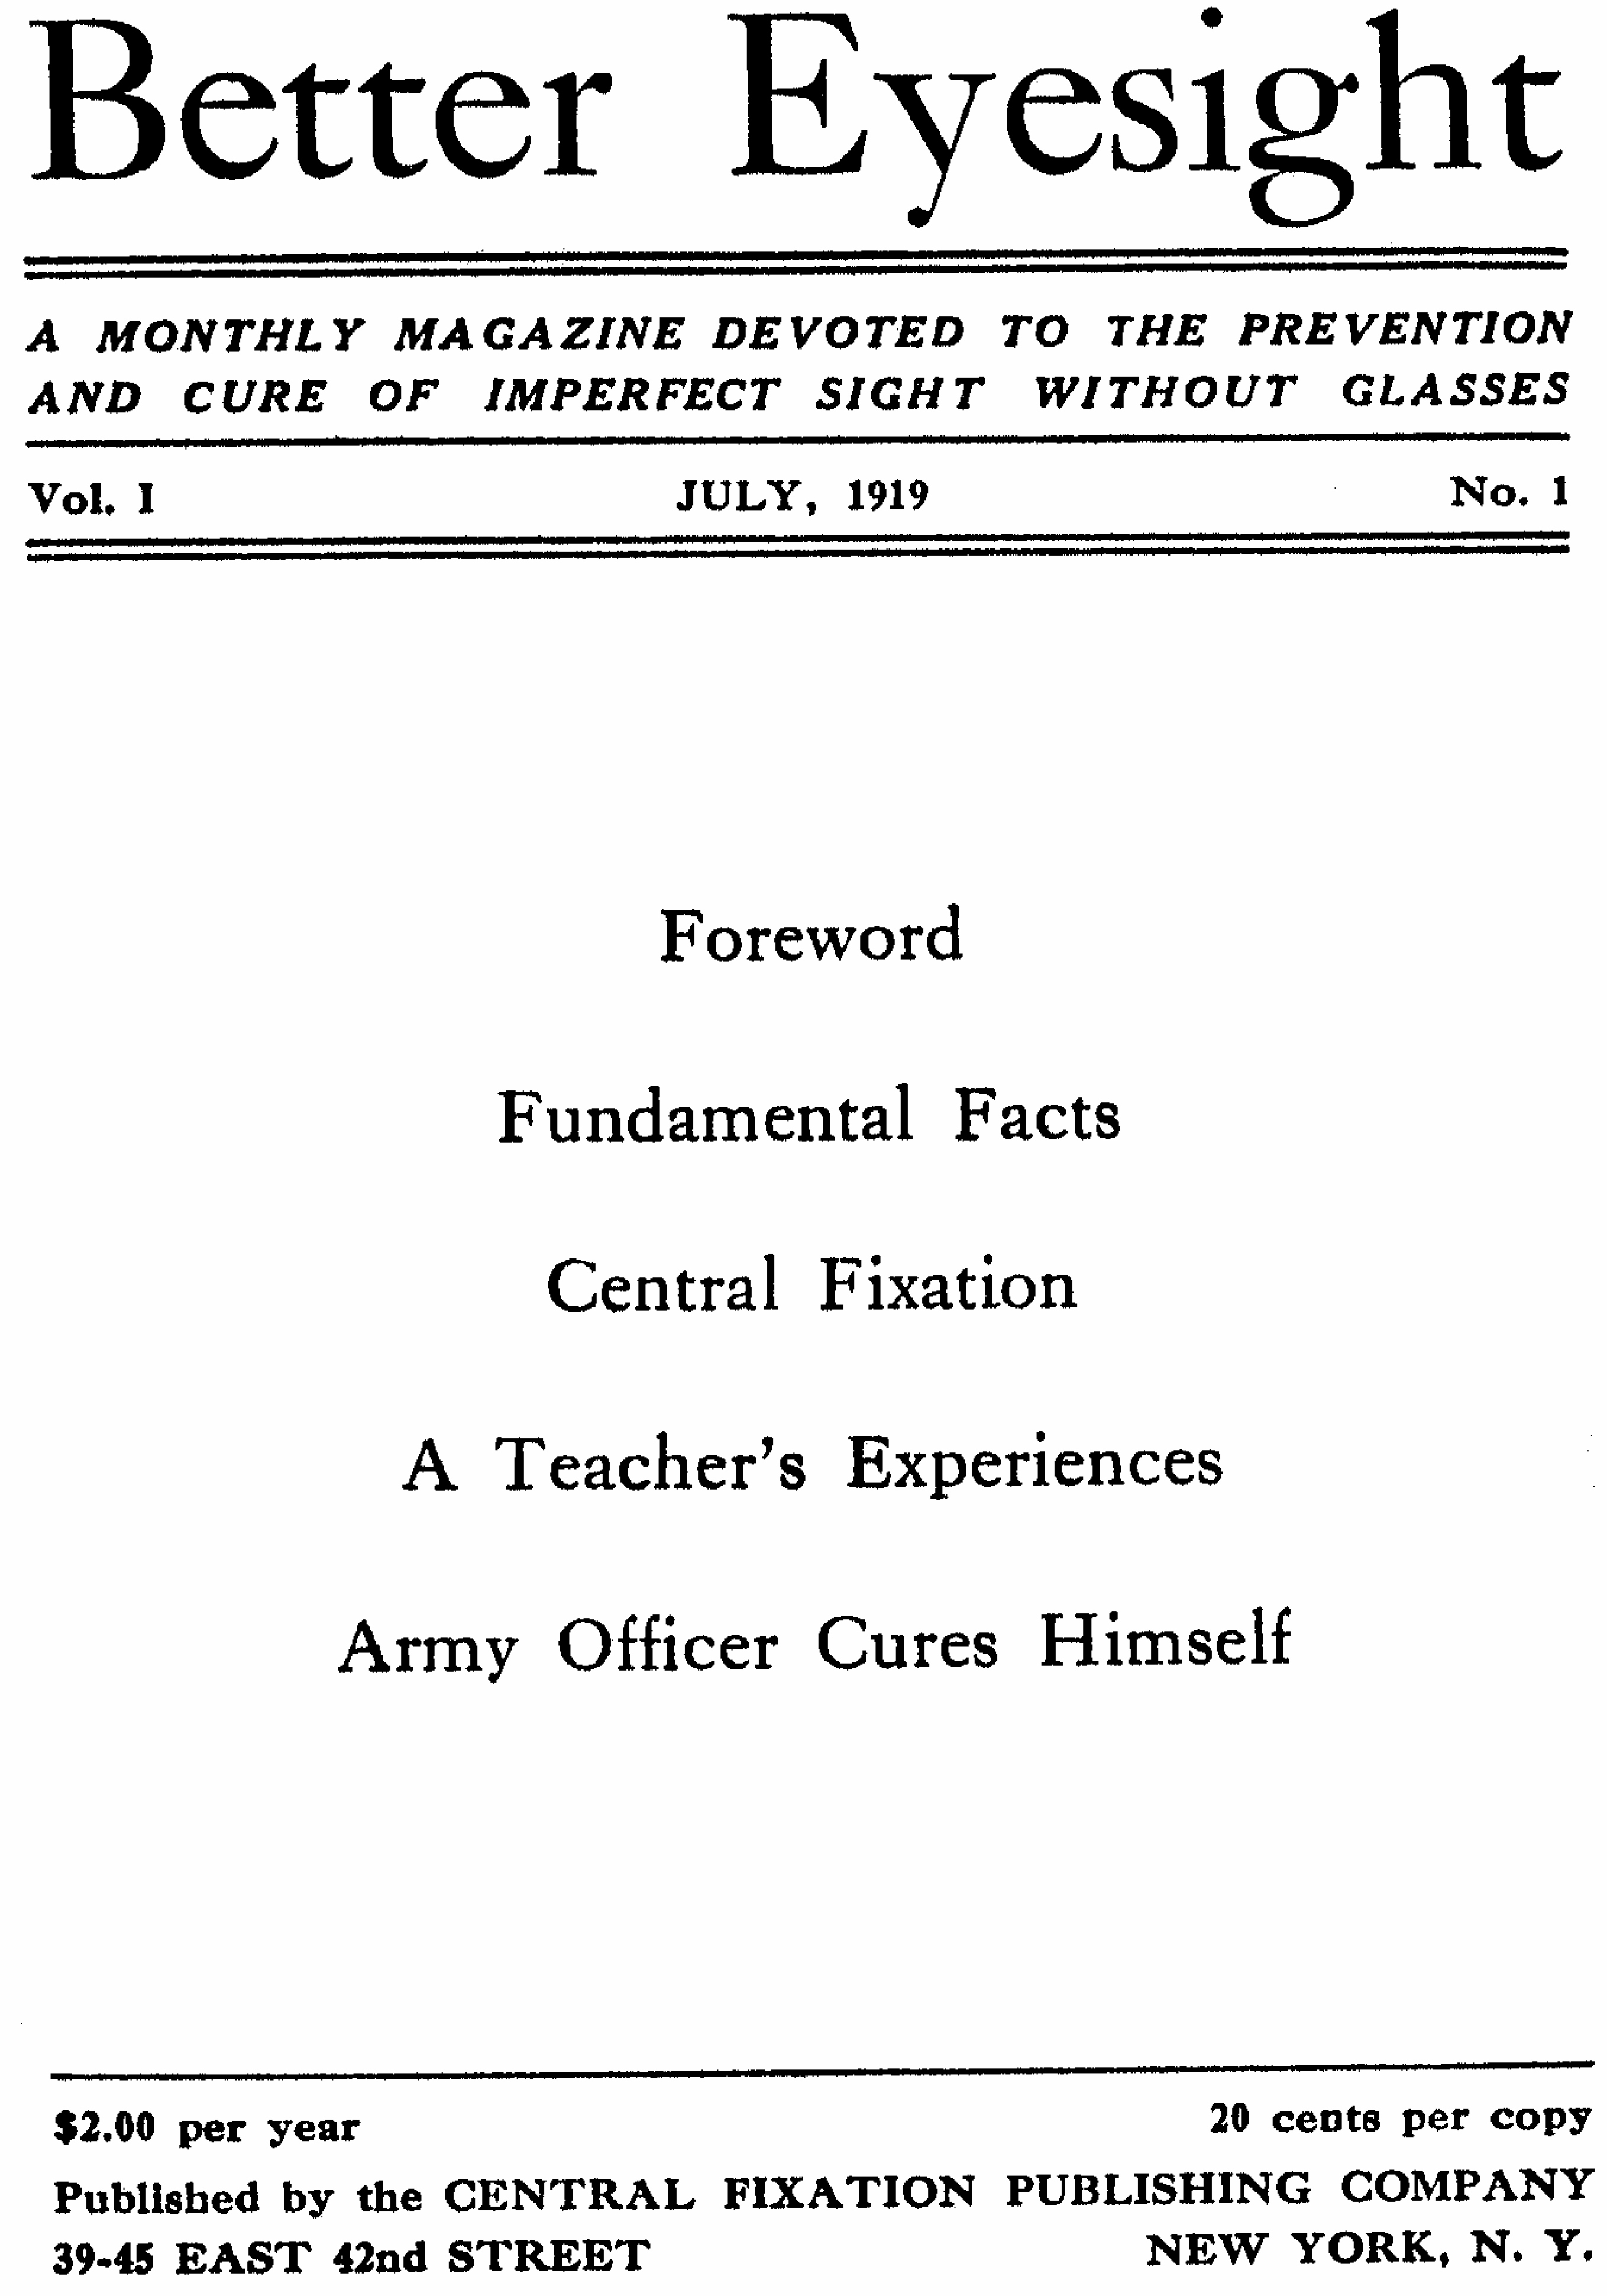 Better Eyesight Magazine Original Cover - July, 1919